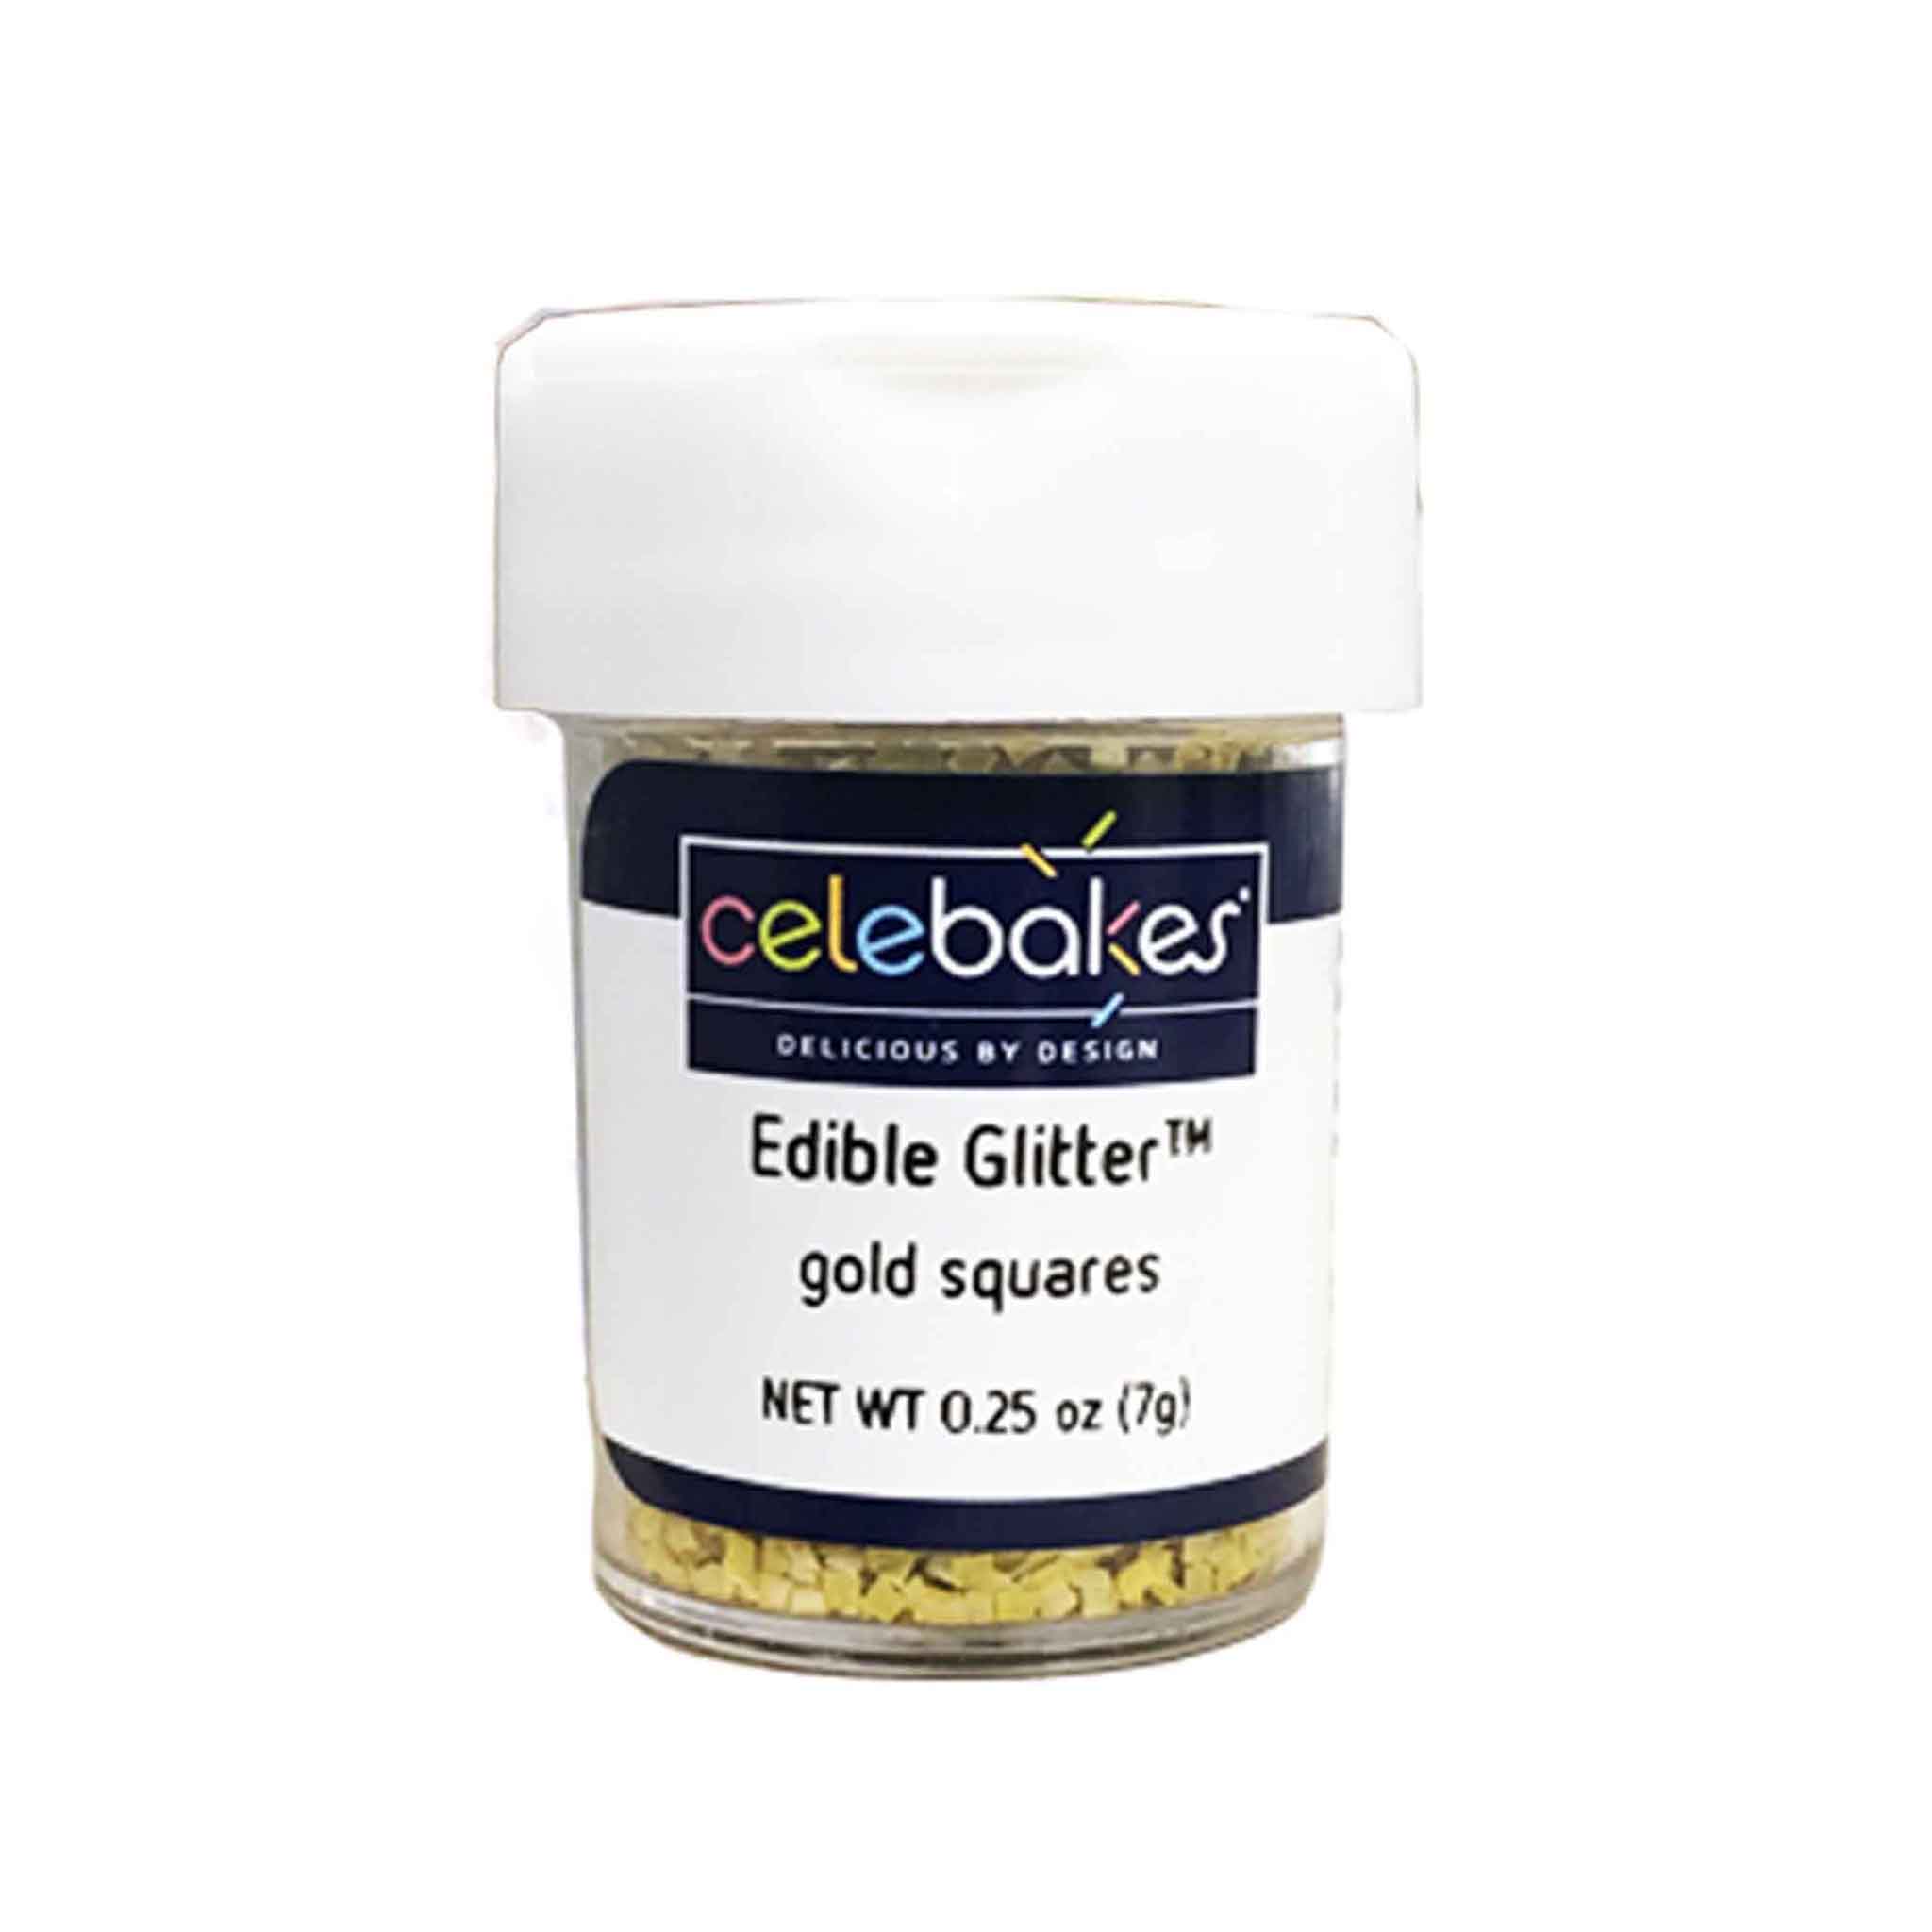 Celebakes Edible Glitter Squares Gold